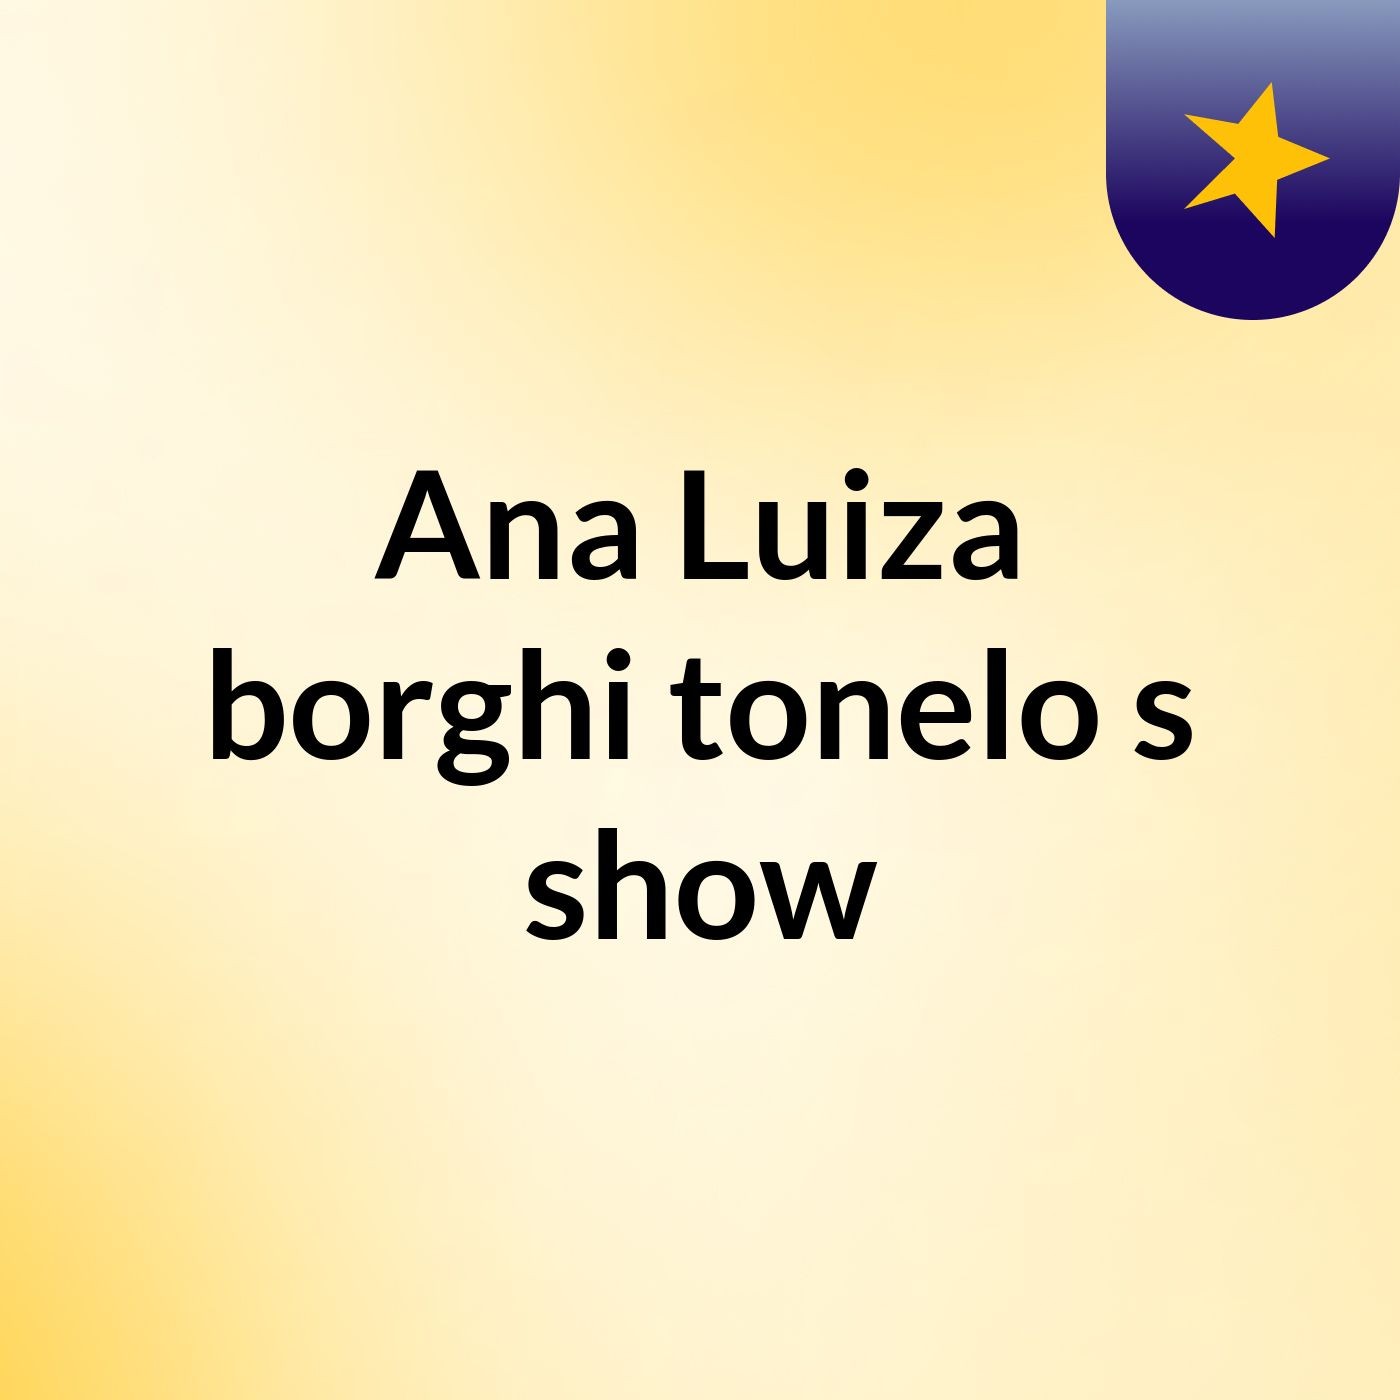 Ana Luiza borghi tonelo's show